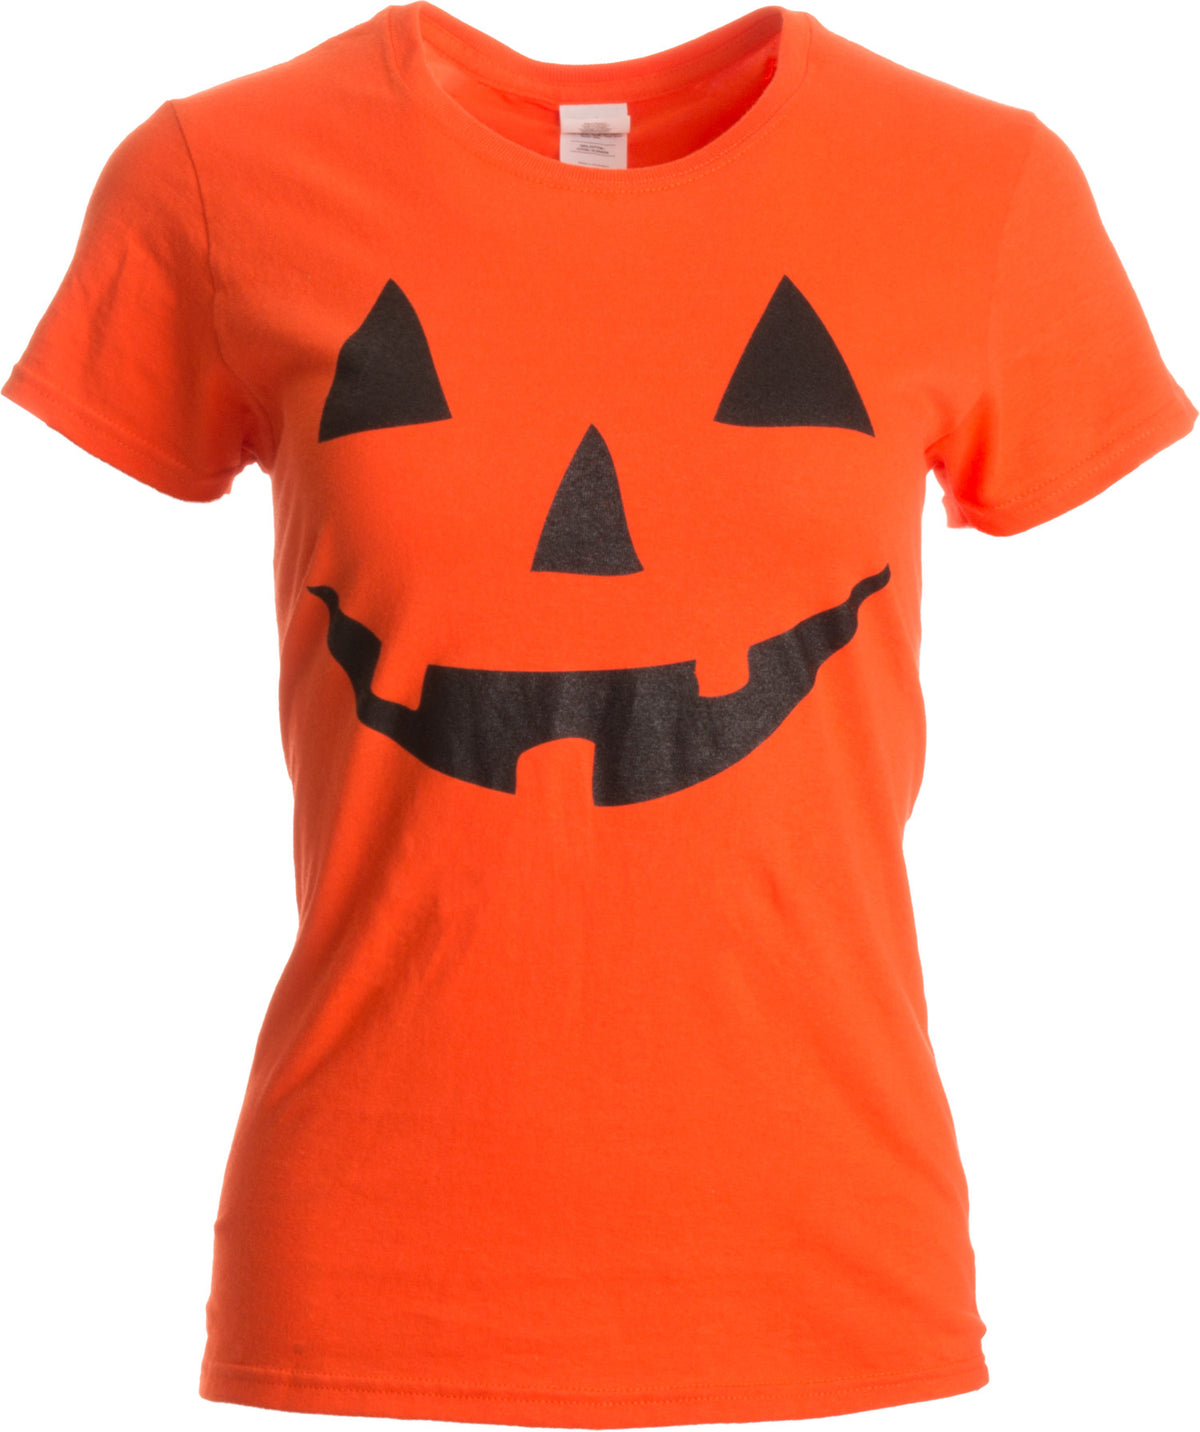 JACK O' LANTERN PUMPKIN Women's T-shirt / Easy Halloween Costume Fun Tee